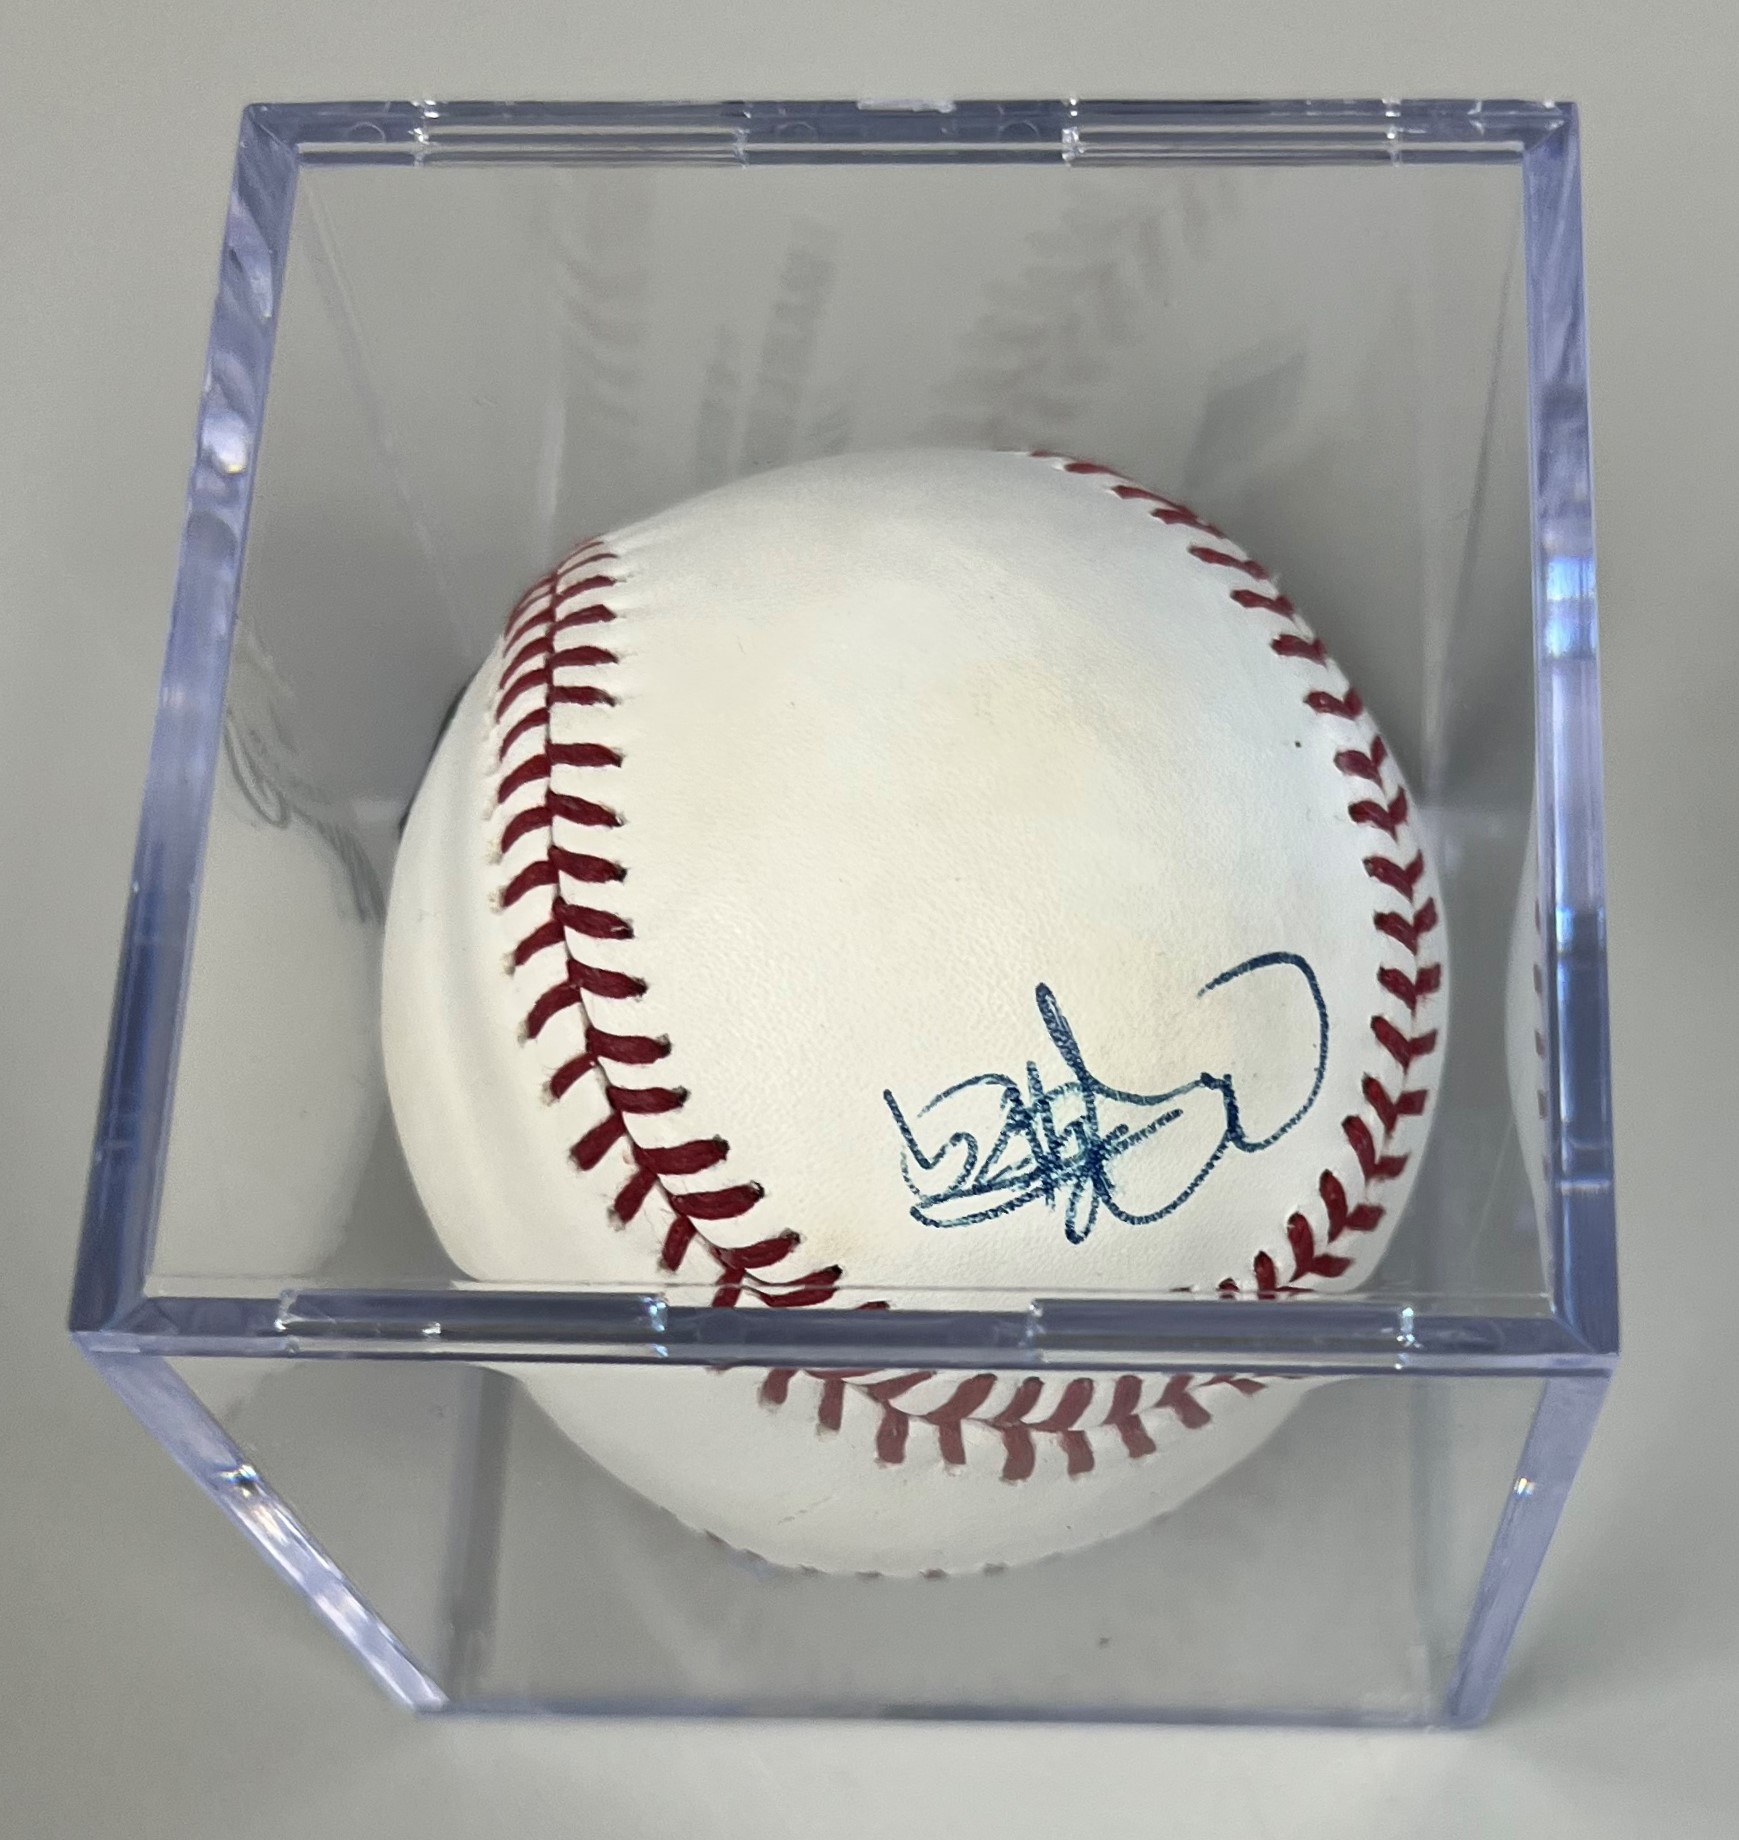 Chris Carpenter Autographed Baseball